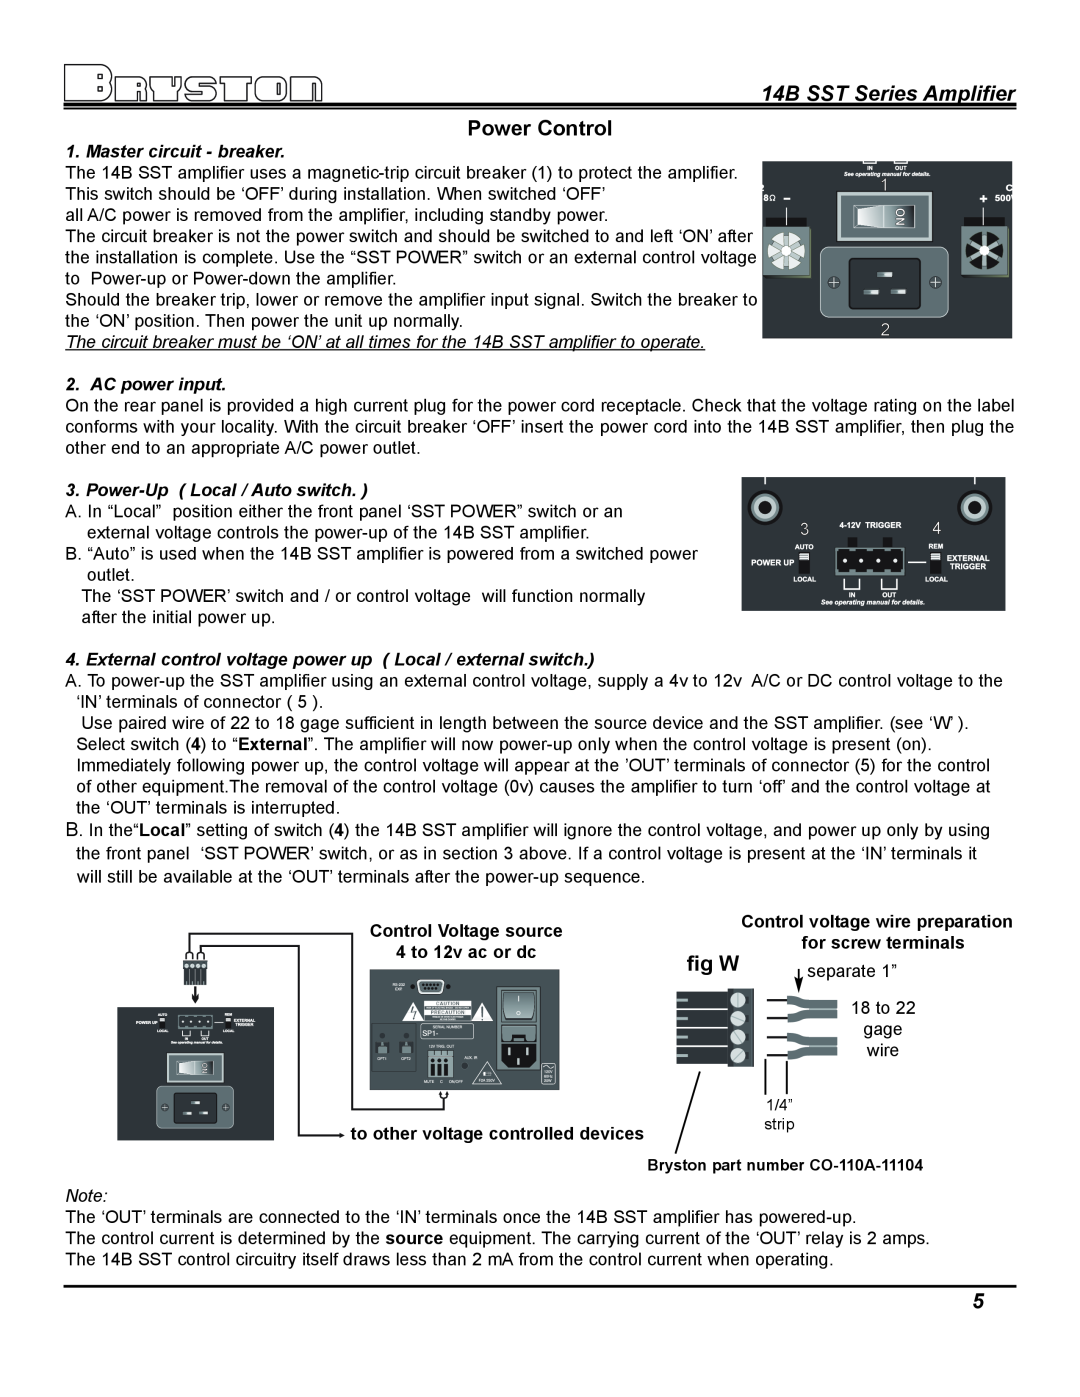 Bryston owner manual Power Control, fig W, 14B SST Series Amplifier, Master circuit - breaker, AC power input 